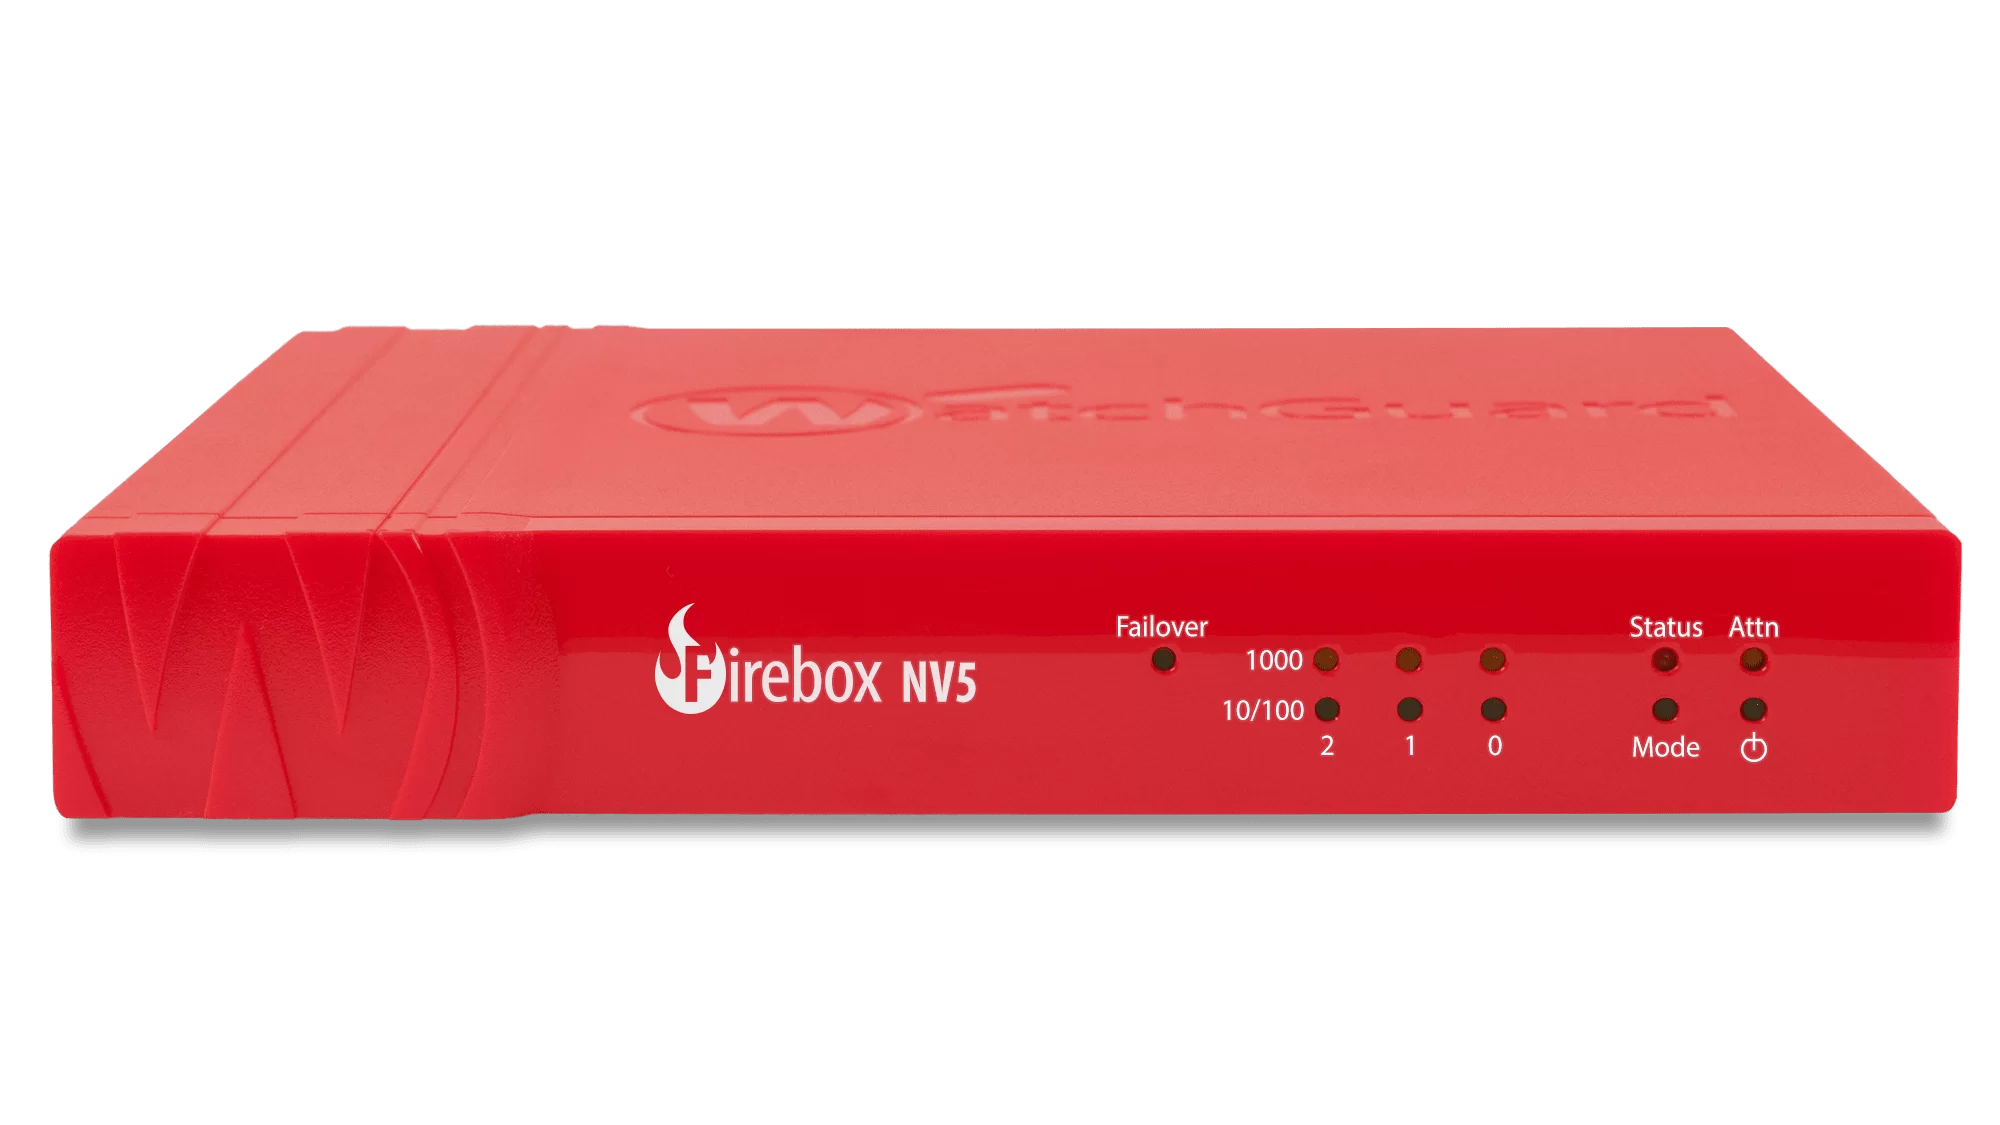 Firebox NV5